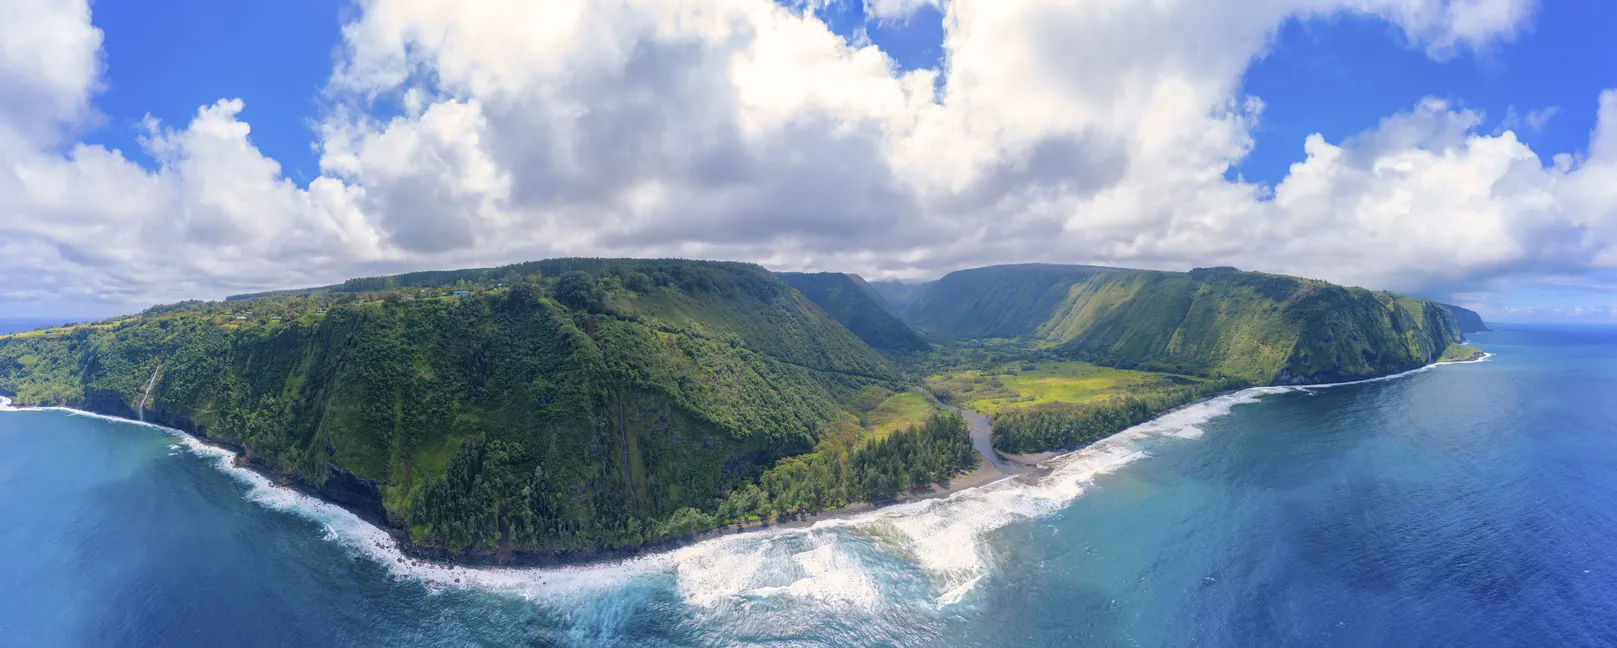 Vallée de Waipiʻo au nord-est de l'île d'Hawaii (Big Island) au pied du volcan Kohala. © iStock / pawel.gaul